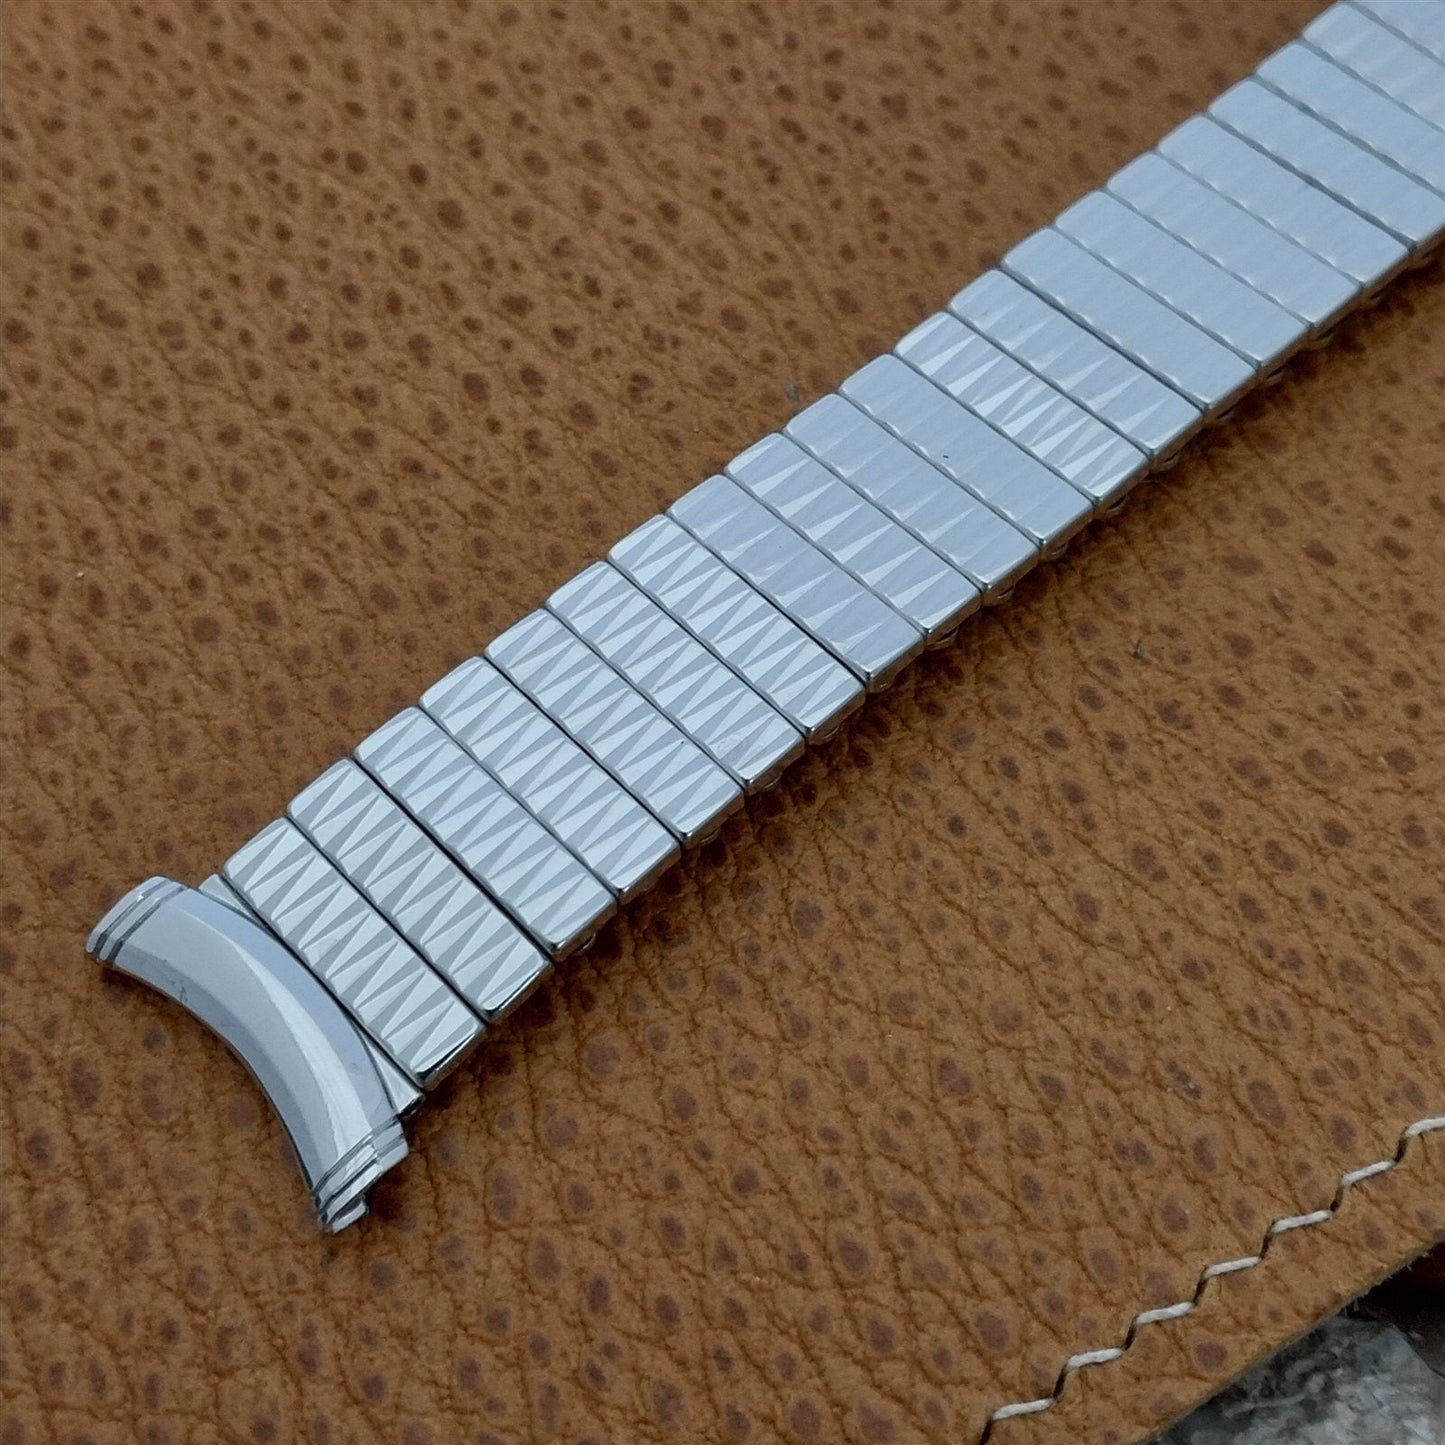 19mm 18mm 16mm Kreisler 10k White Gold-Filled Unused 1960s Vintage Watch Band